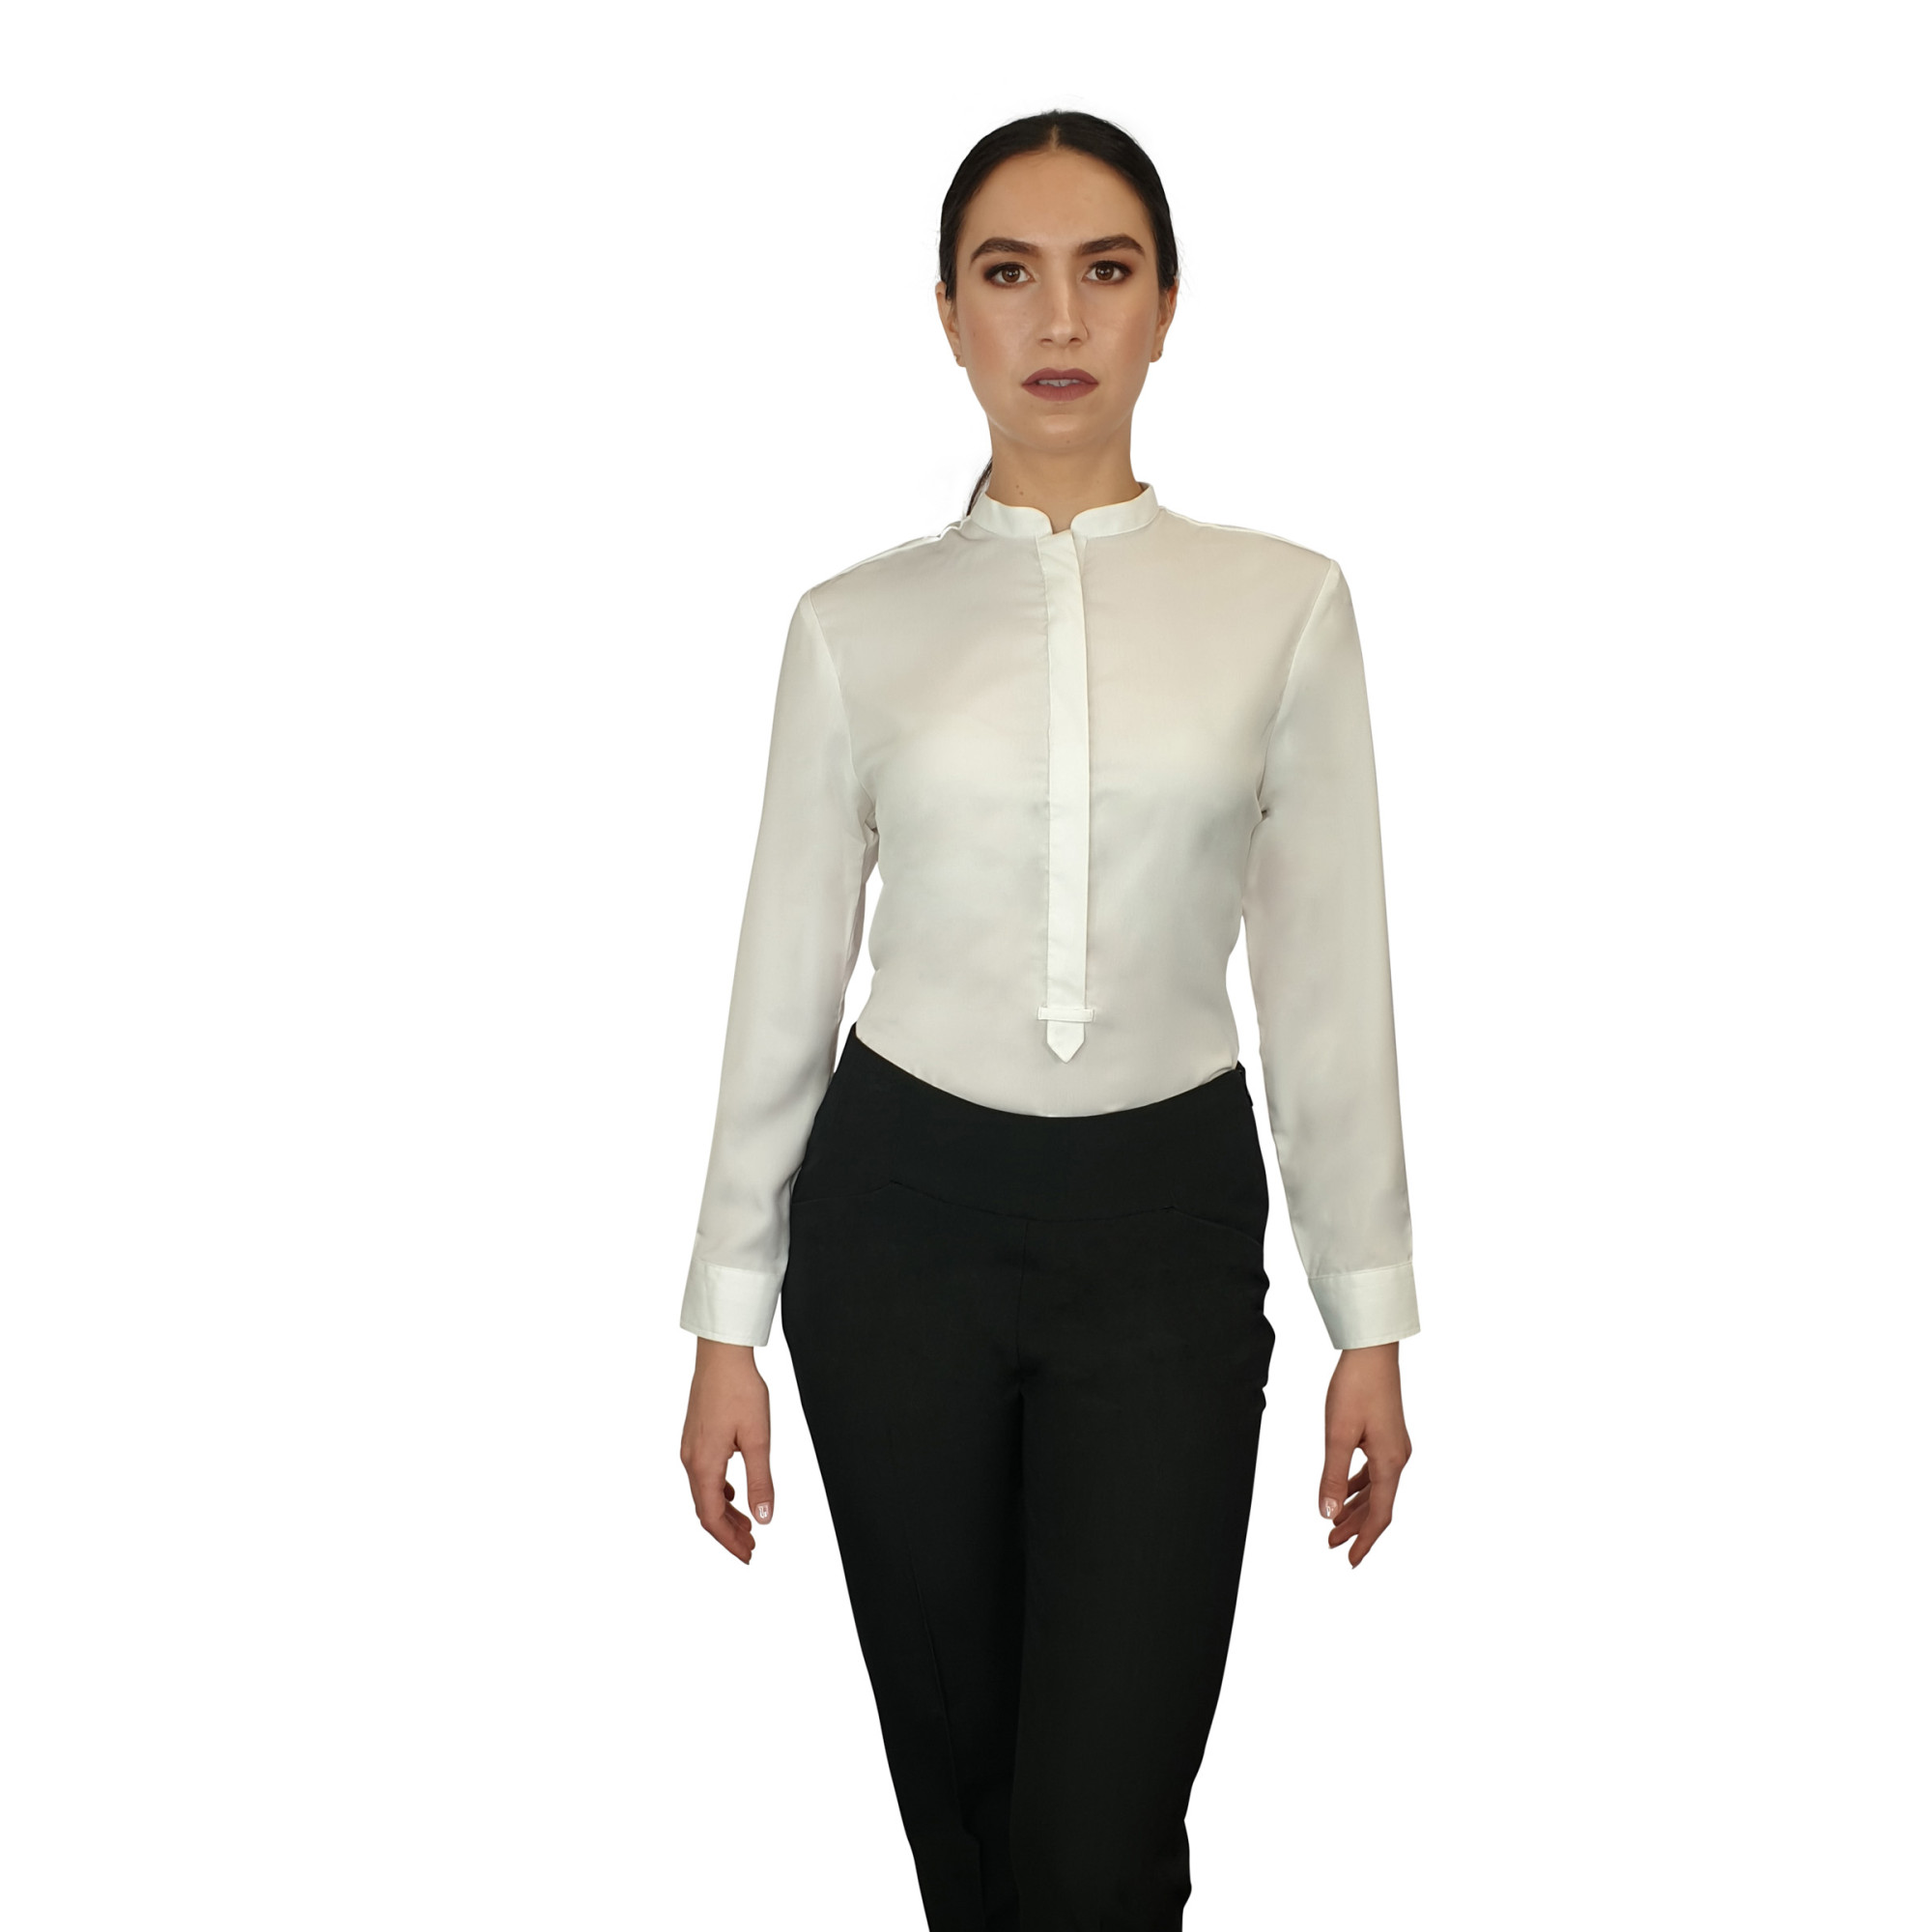 Francesca Mandarin Collar Blouse - White Long Sleeve - Uniform Edit